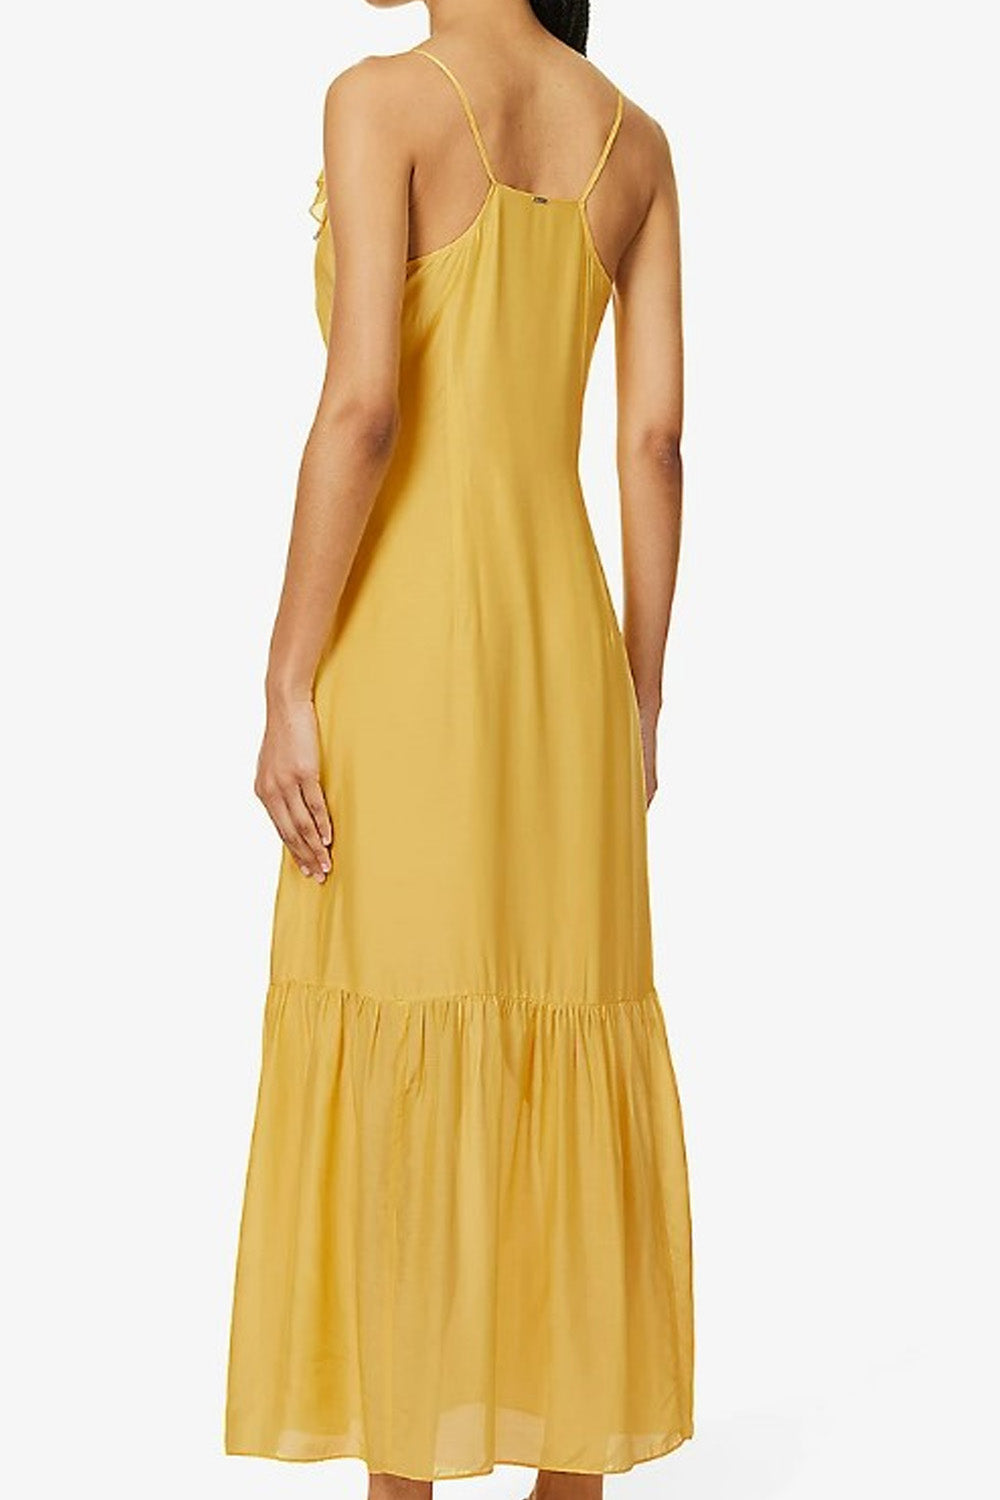 Mellifluous yellow Dress